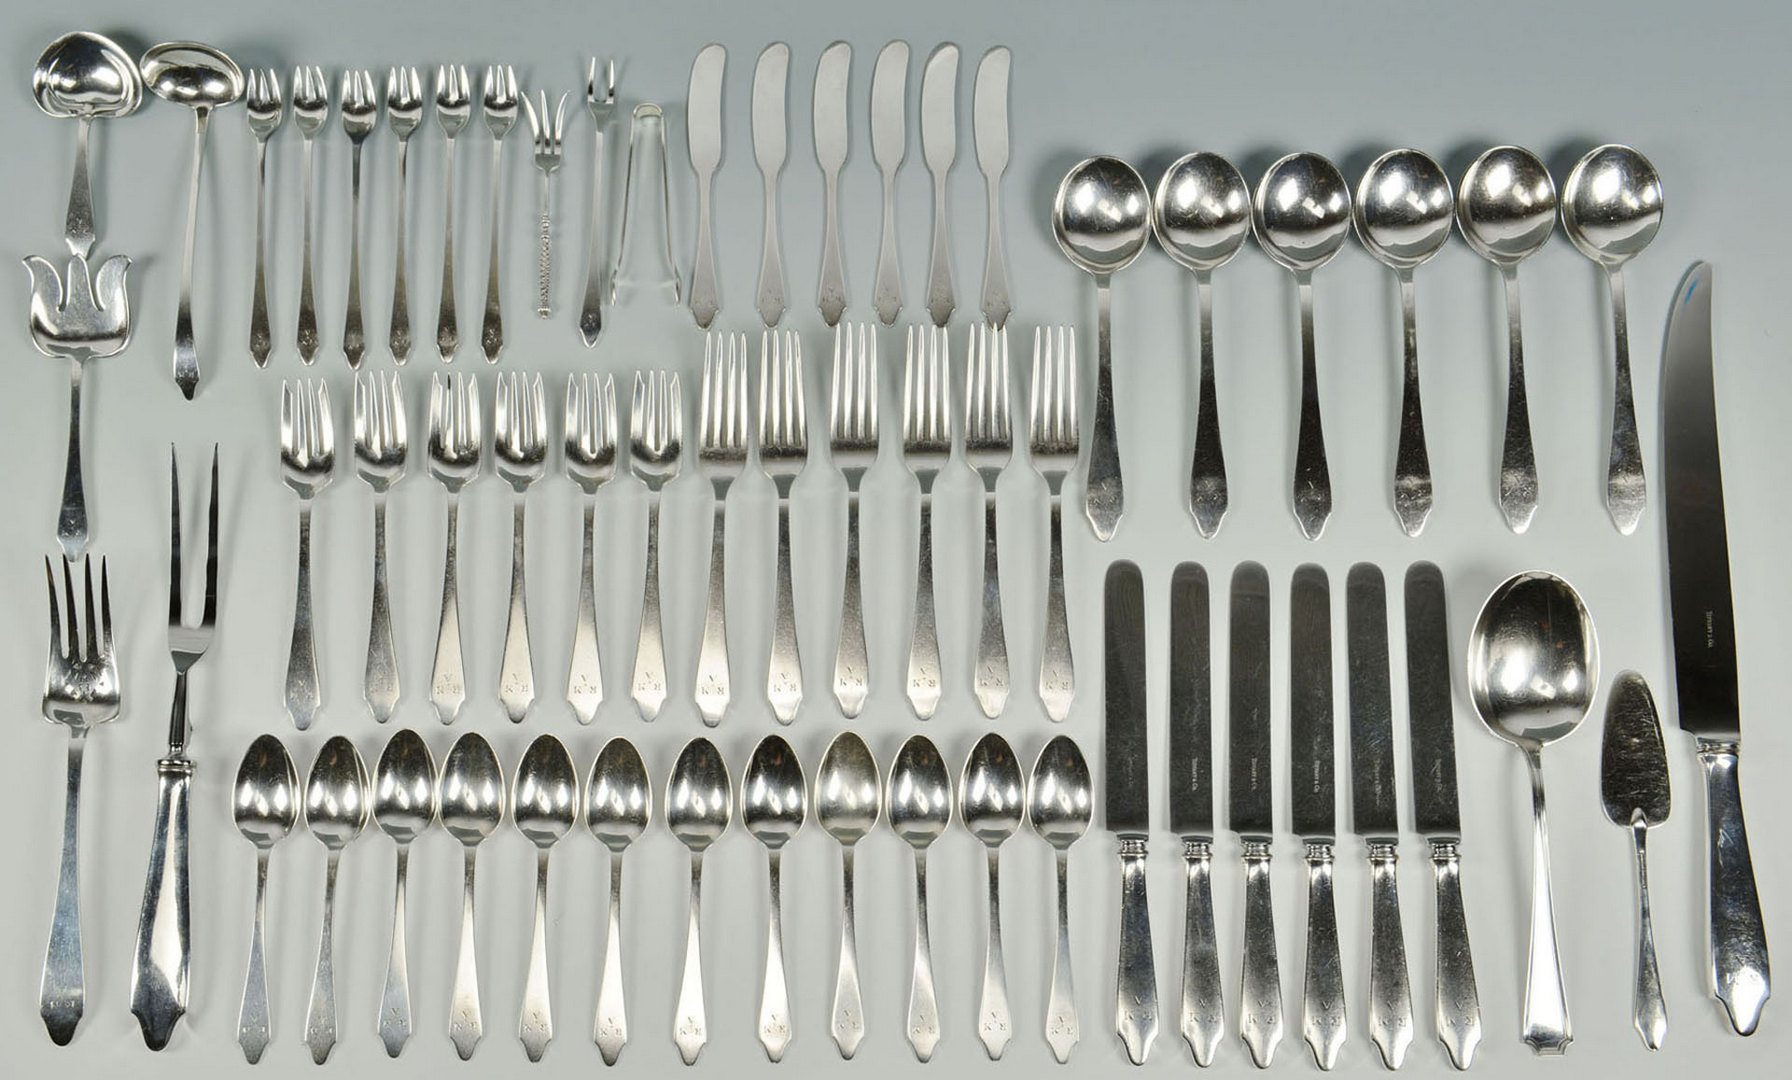 tiffany silver flatware patterns